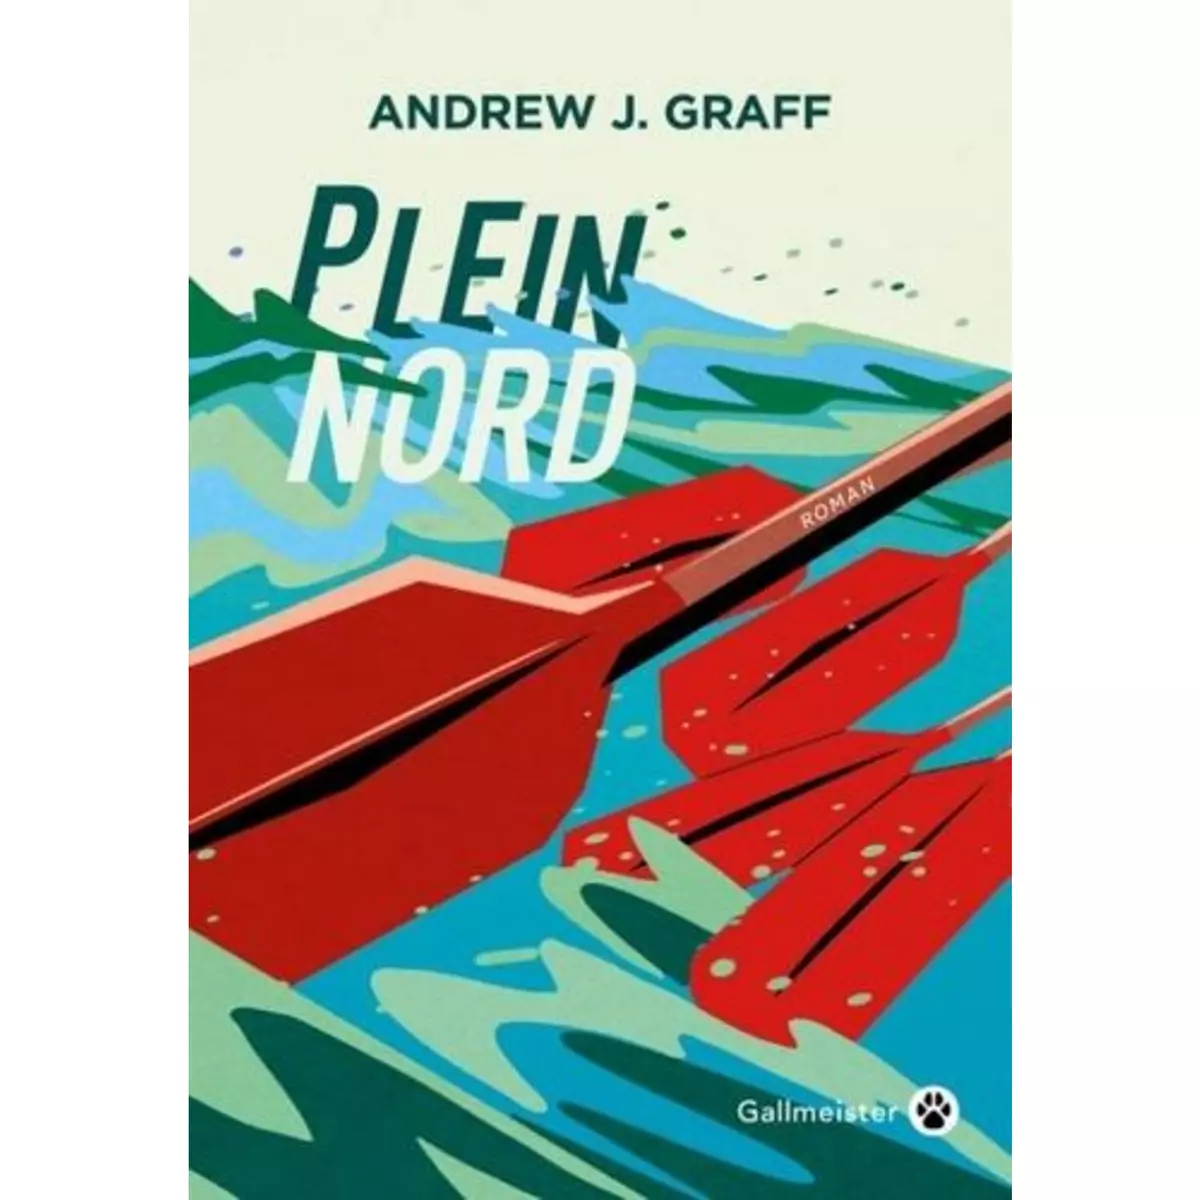  PLEIN NORD, Graff Andrew J.